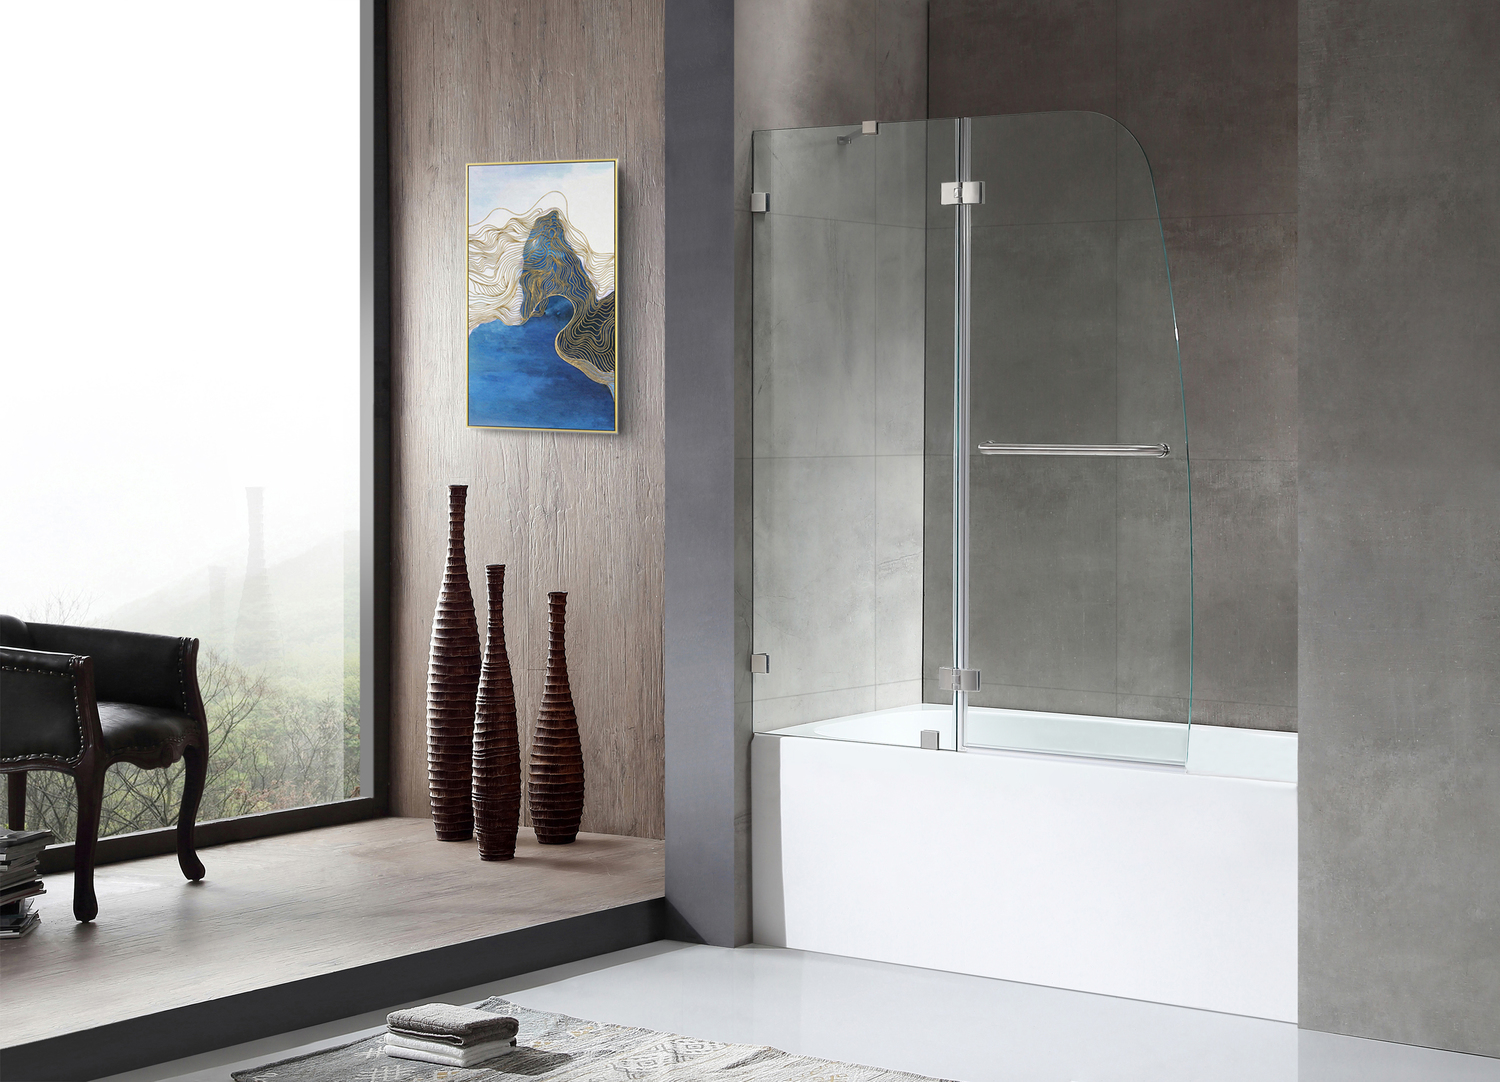 senior tubs and showers Anzzi BATHROOM - Bathtubs - Drop-in Bathtub - Alcove - Soaker White